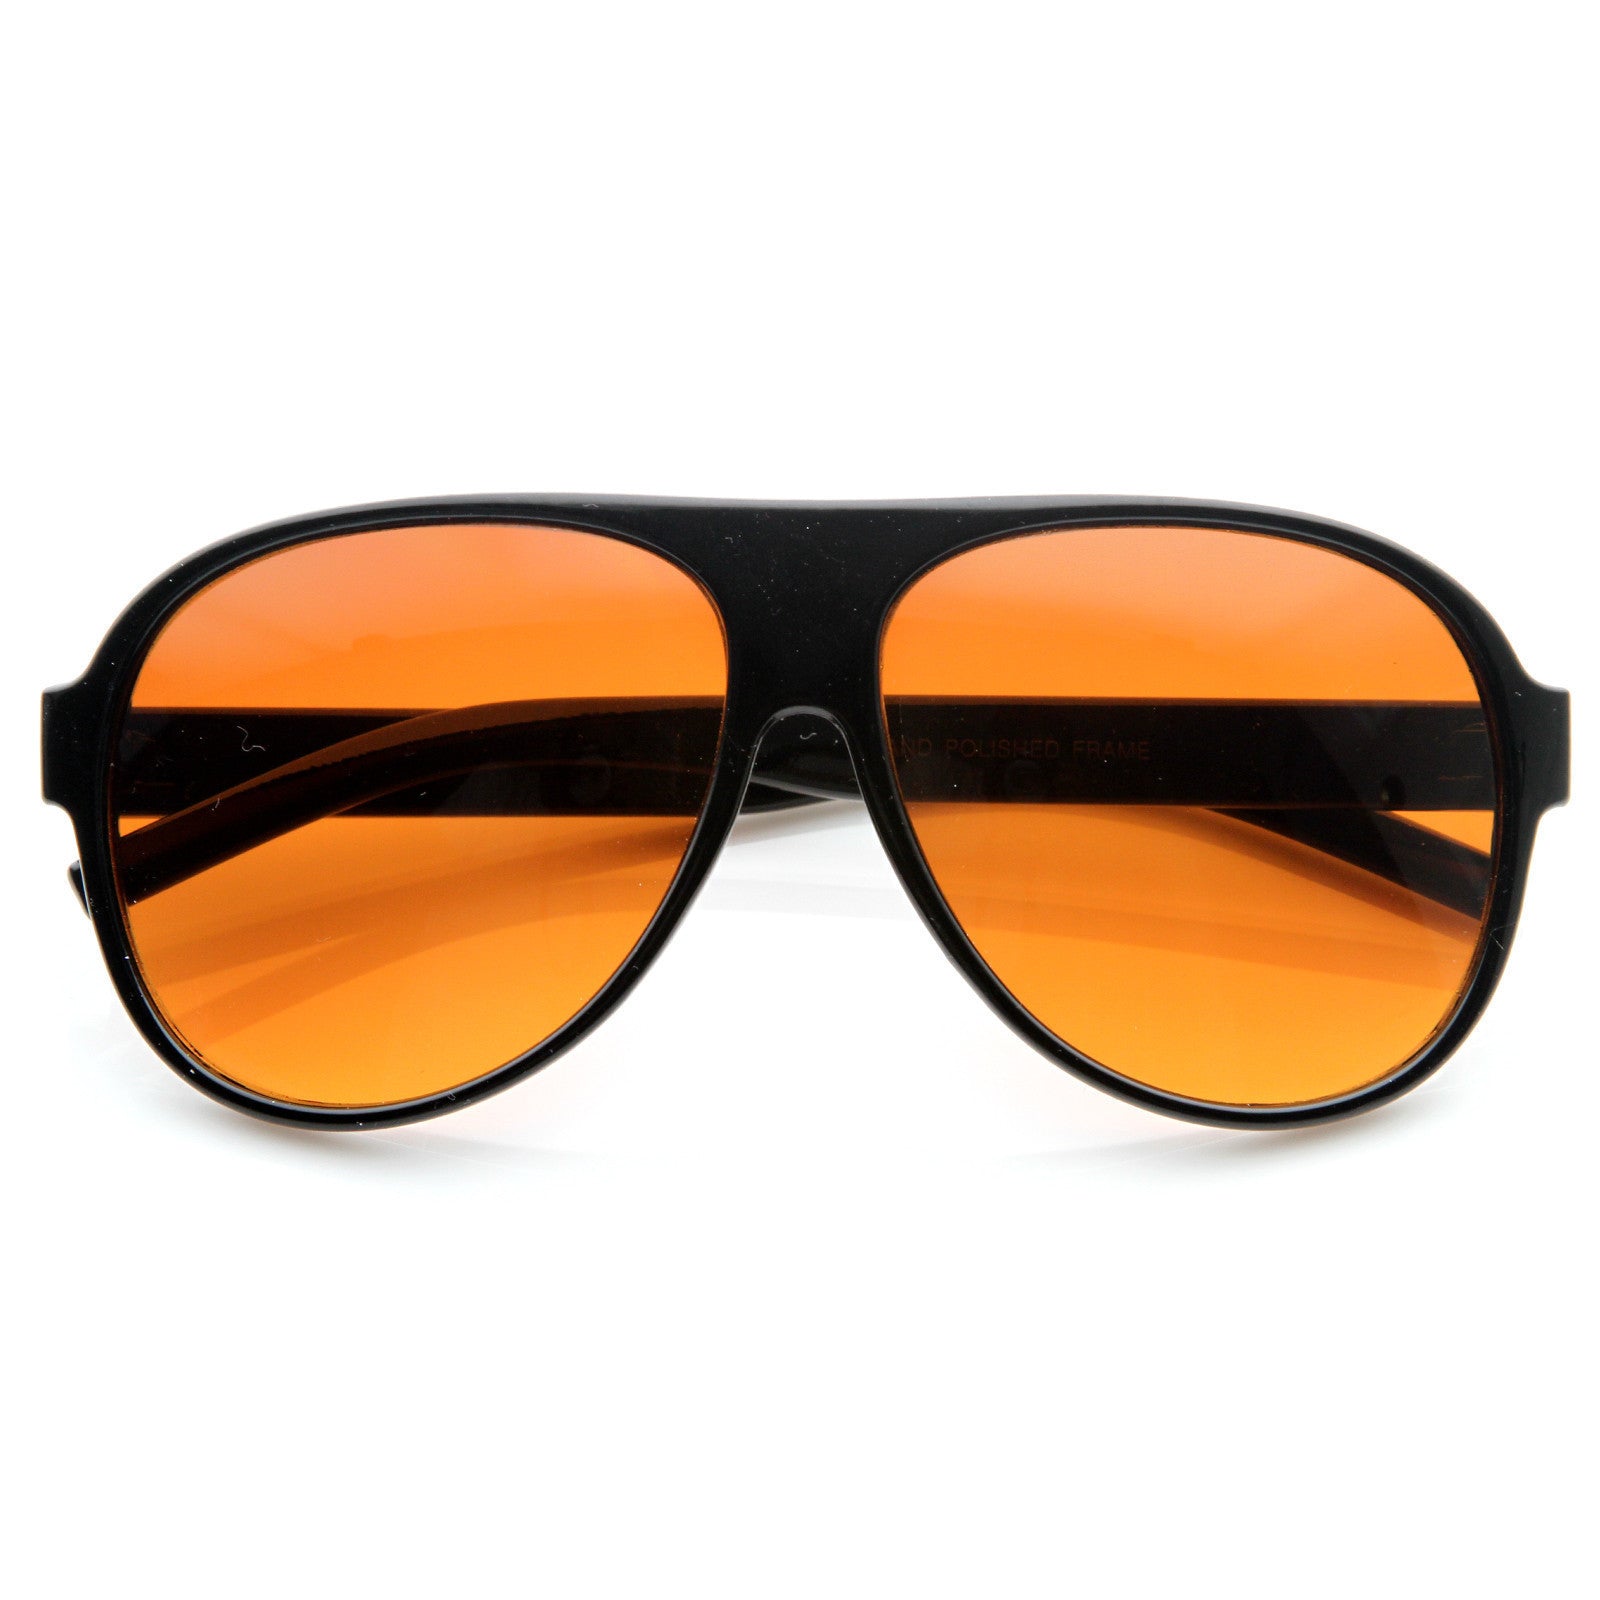 Ambervision Blue Blocker Sunglasses Brand New Vintage 80s